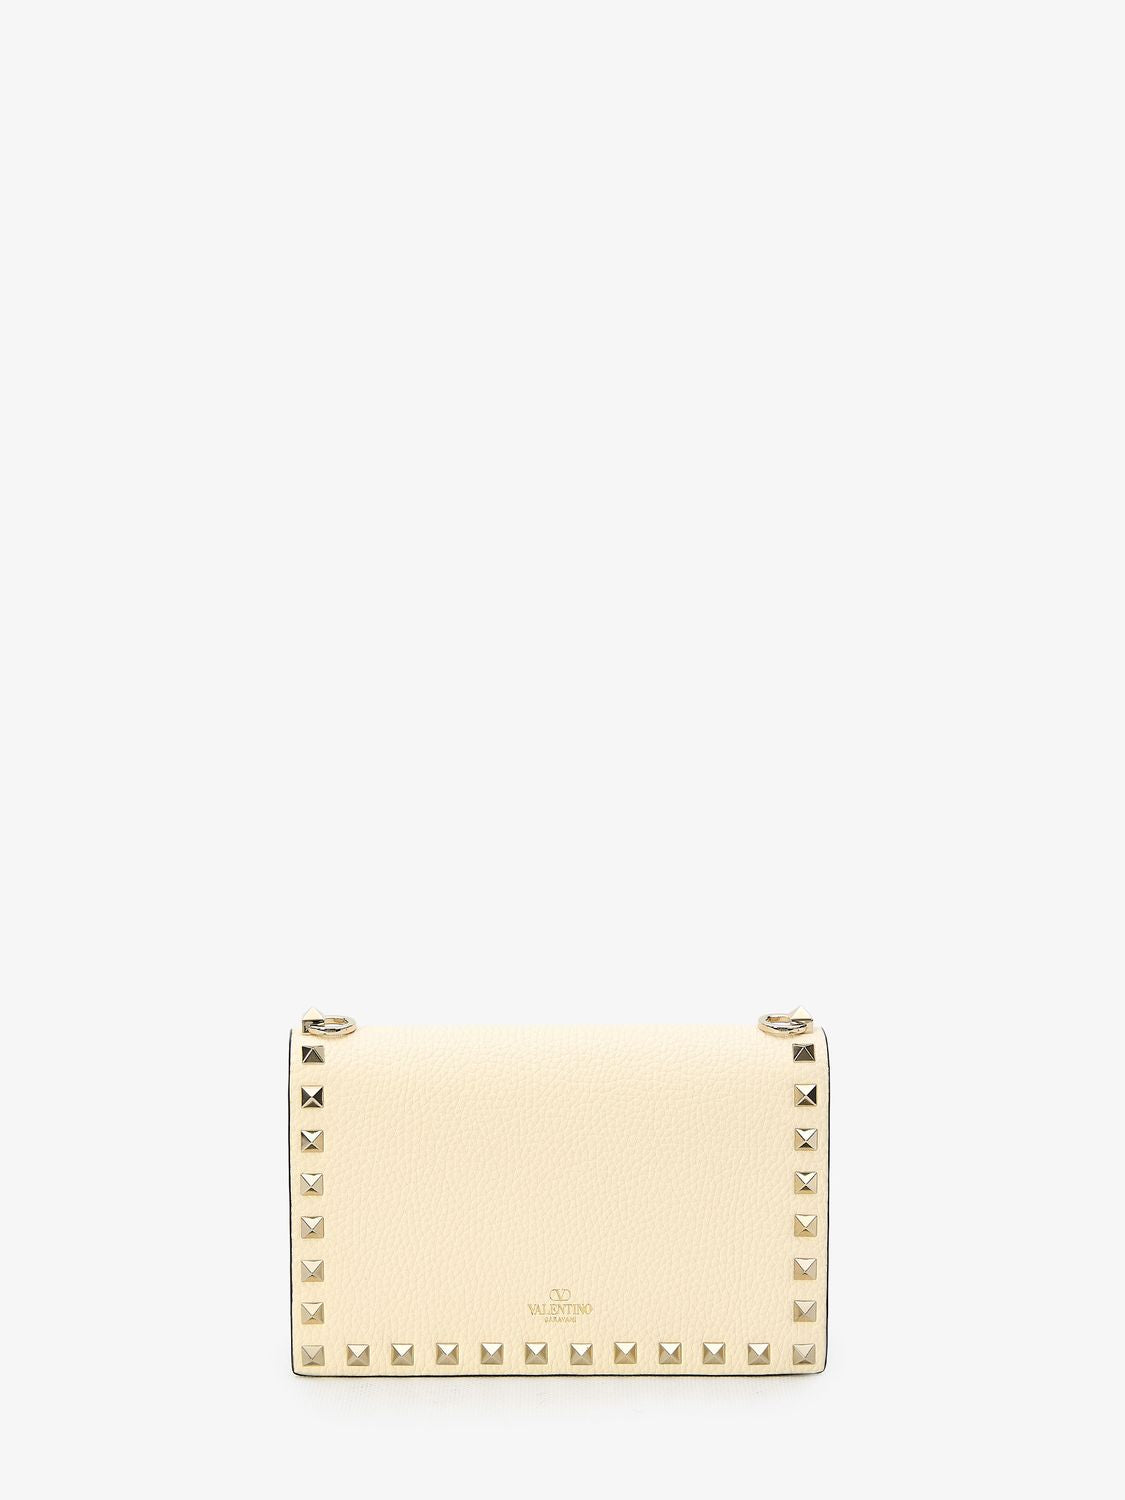 VALENTINO GARAVANI Chic Small Rockstud Cream Grained Leather Handbag with Platinum Studs and Chain Strap 19x4.5x12 cm